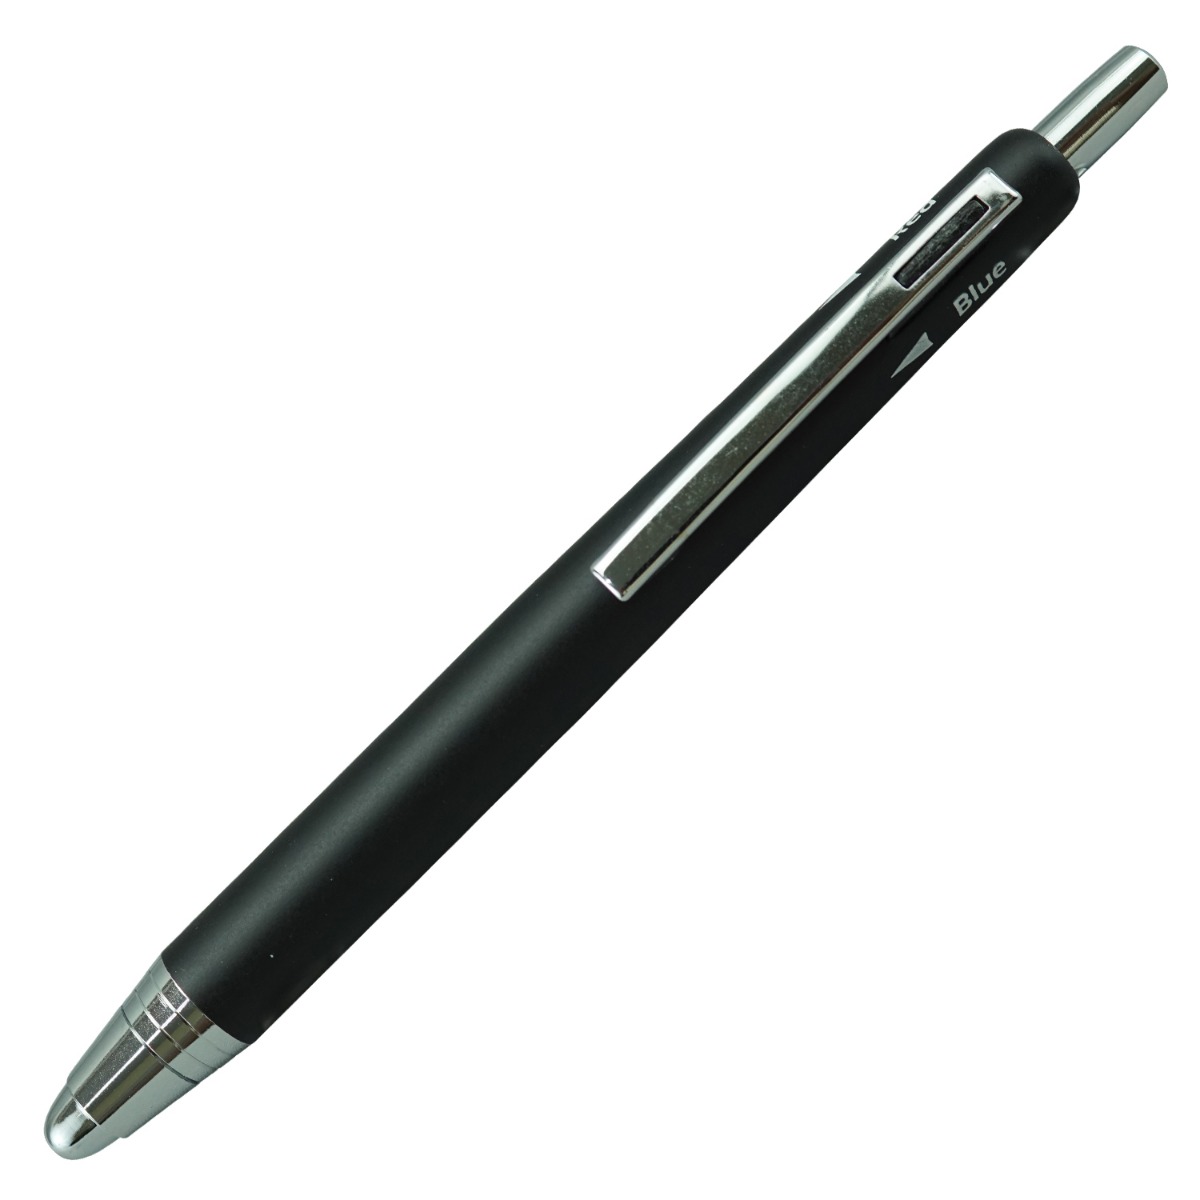 Penhouse Model:16144 Black Color Mat Finish Body  With 3  in 1 Color Pen  Fine Tip Click Ball Pen